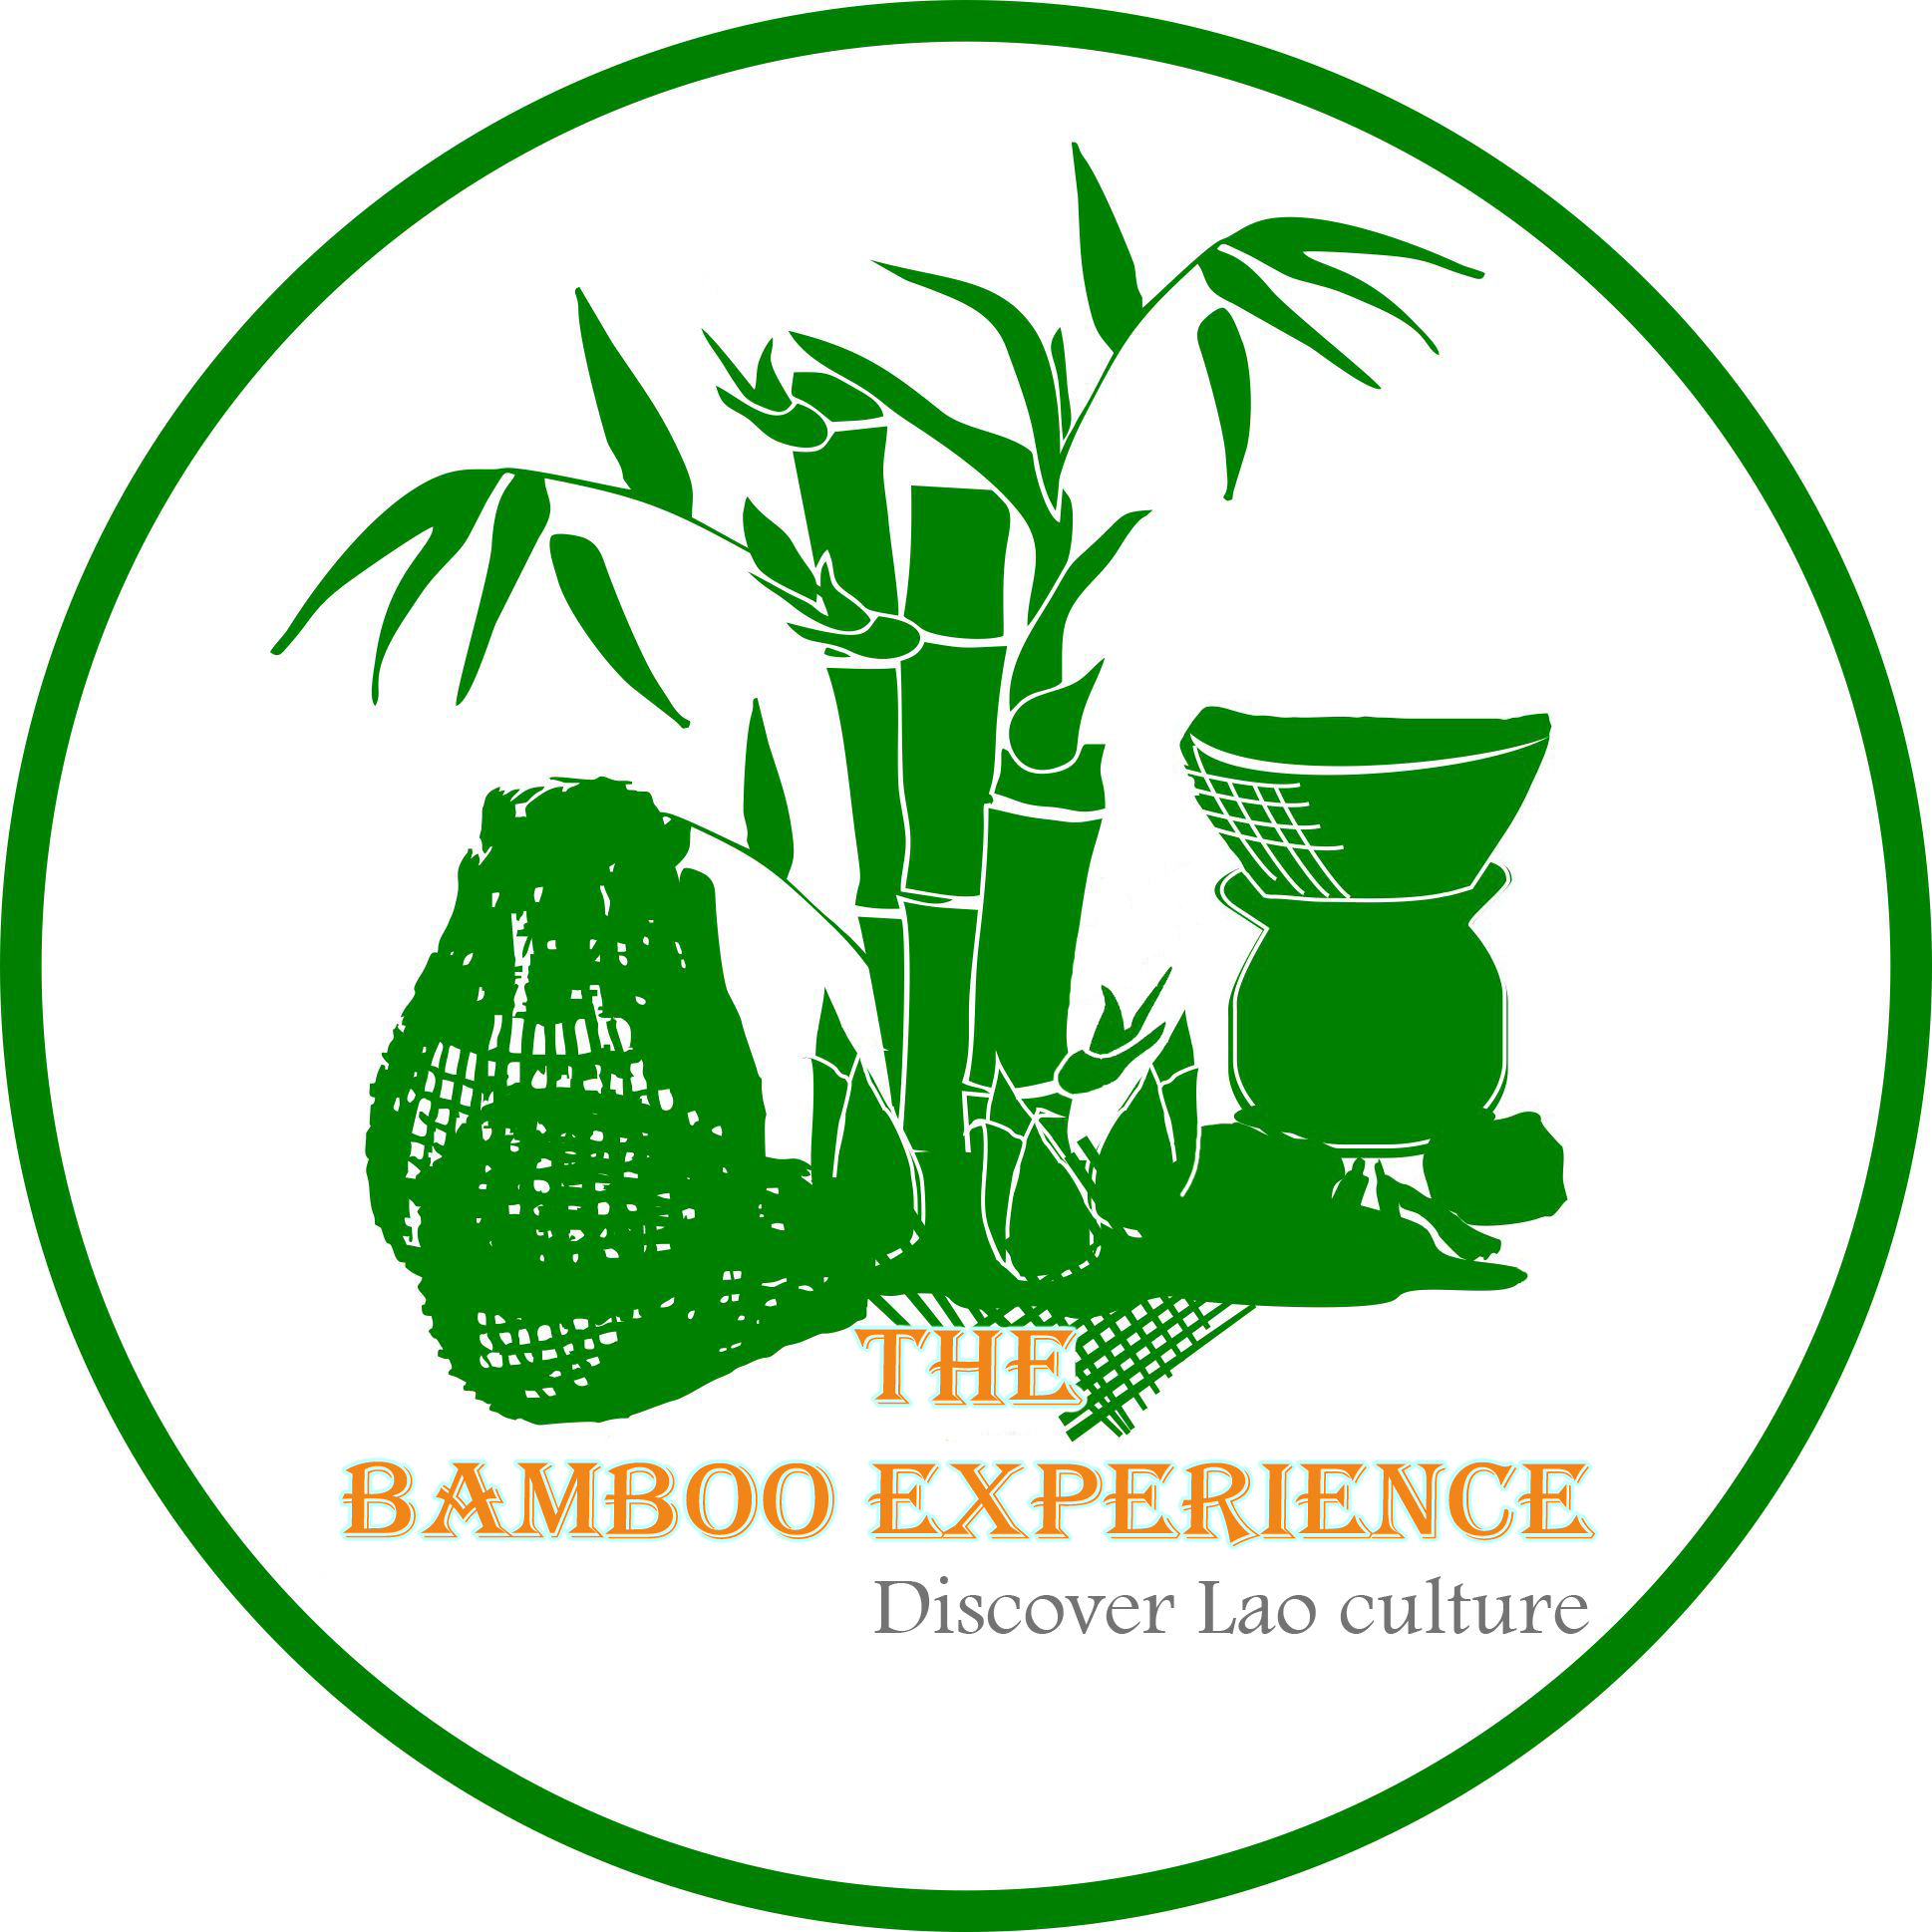 The Bamboo Experience logo